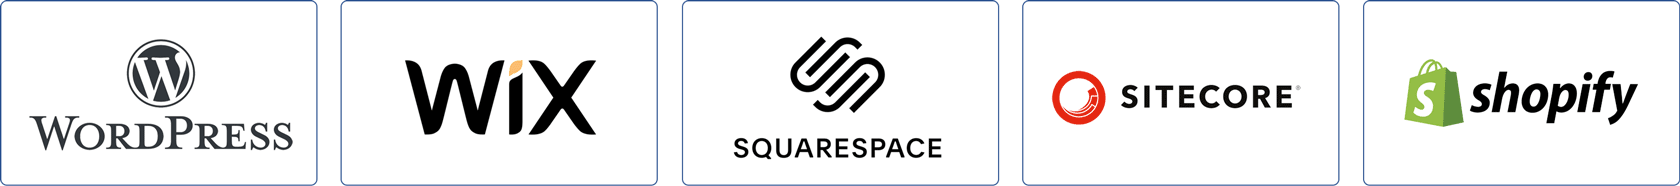 WordPress, Wix, SquareSpace, Sitecore, and Shopify logos